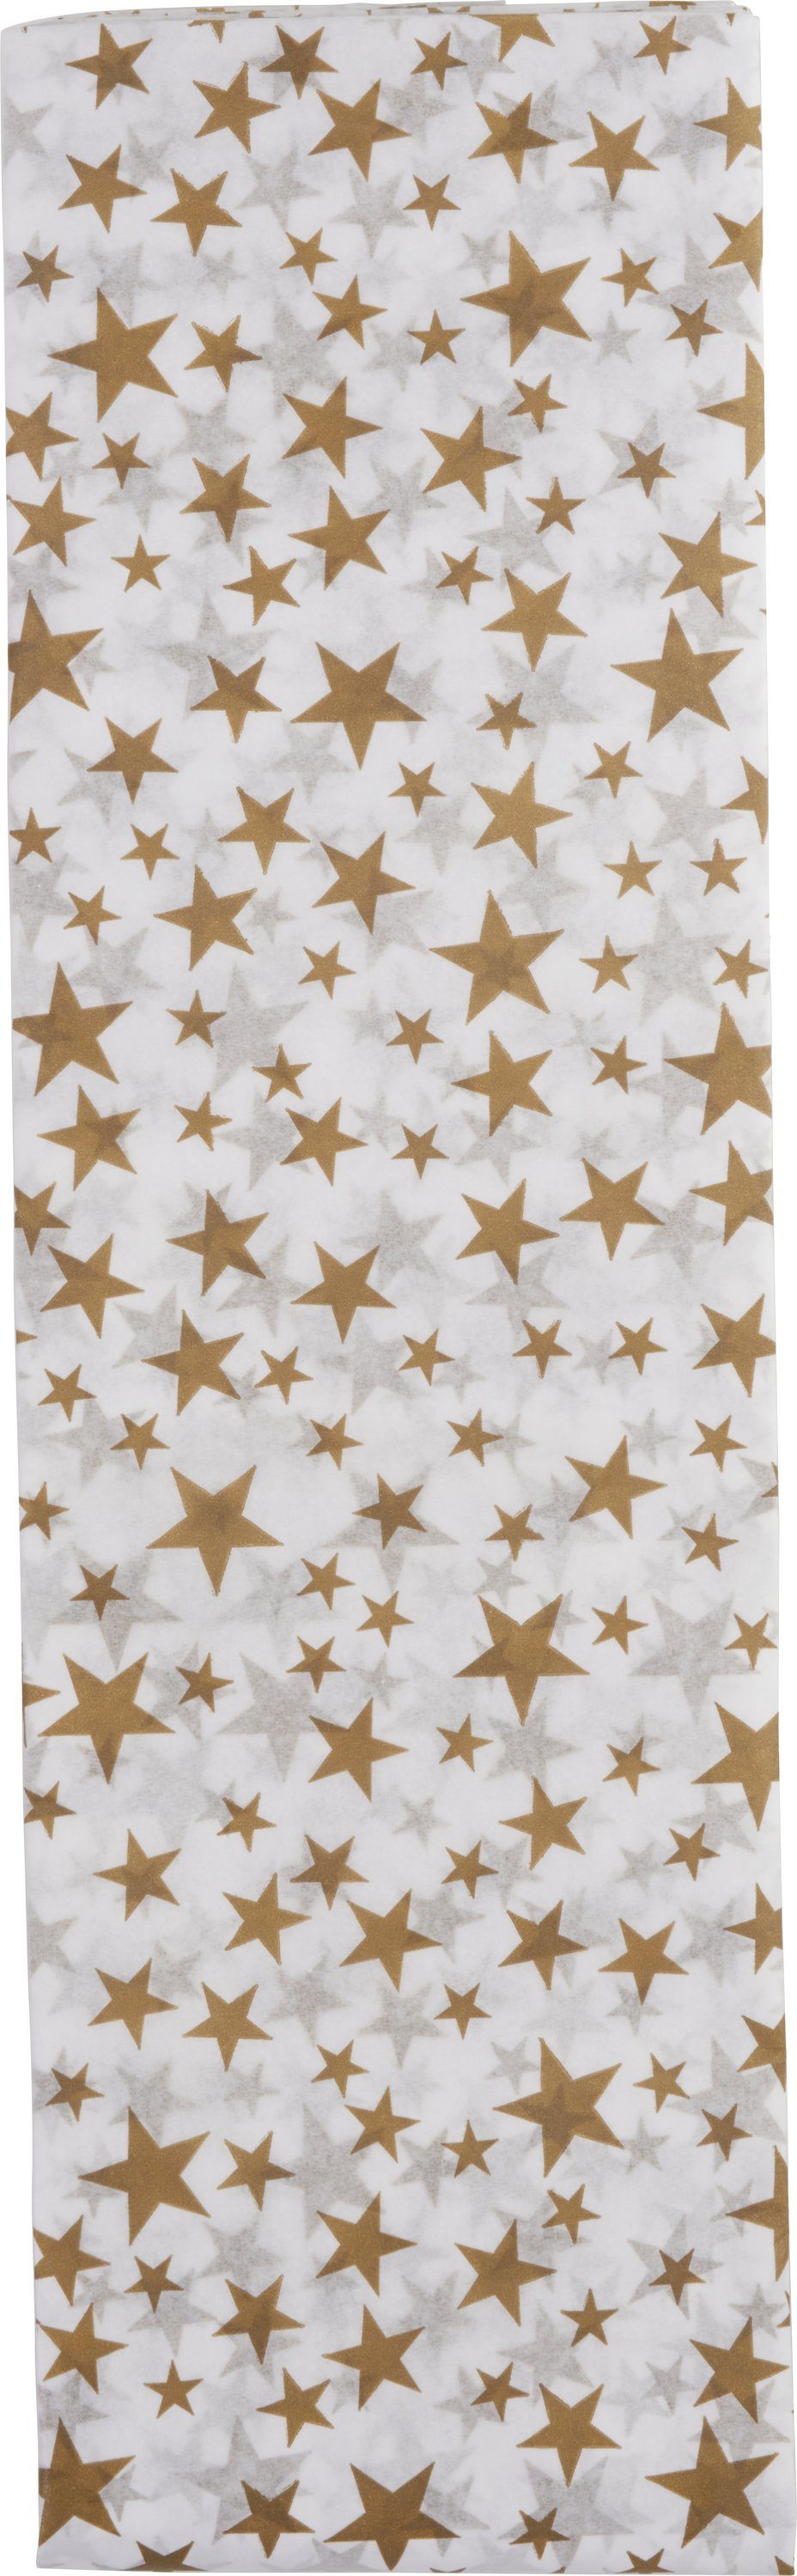 CLAIREFONTAINE Seidenpapier Sterne, 4 Bogen Gold